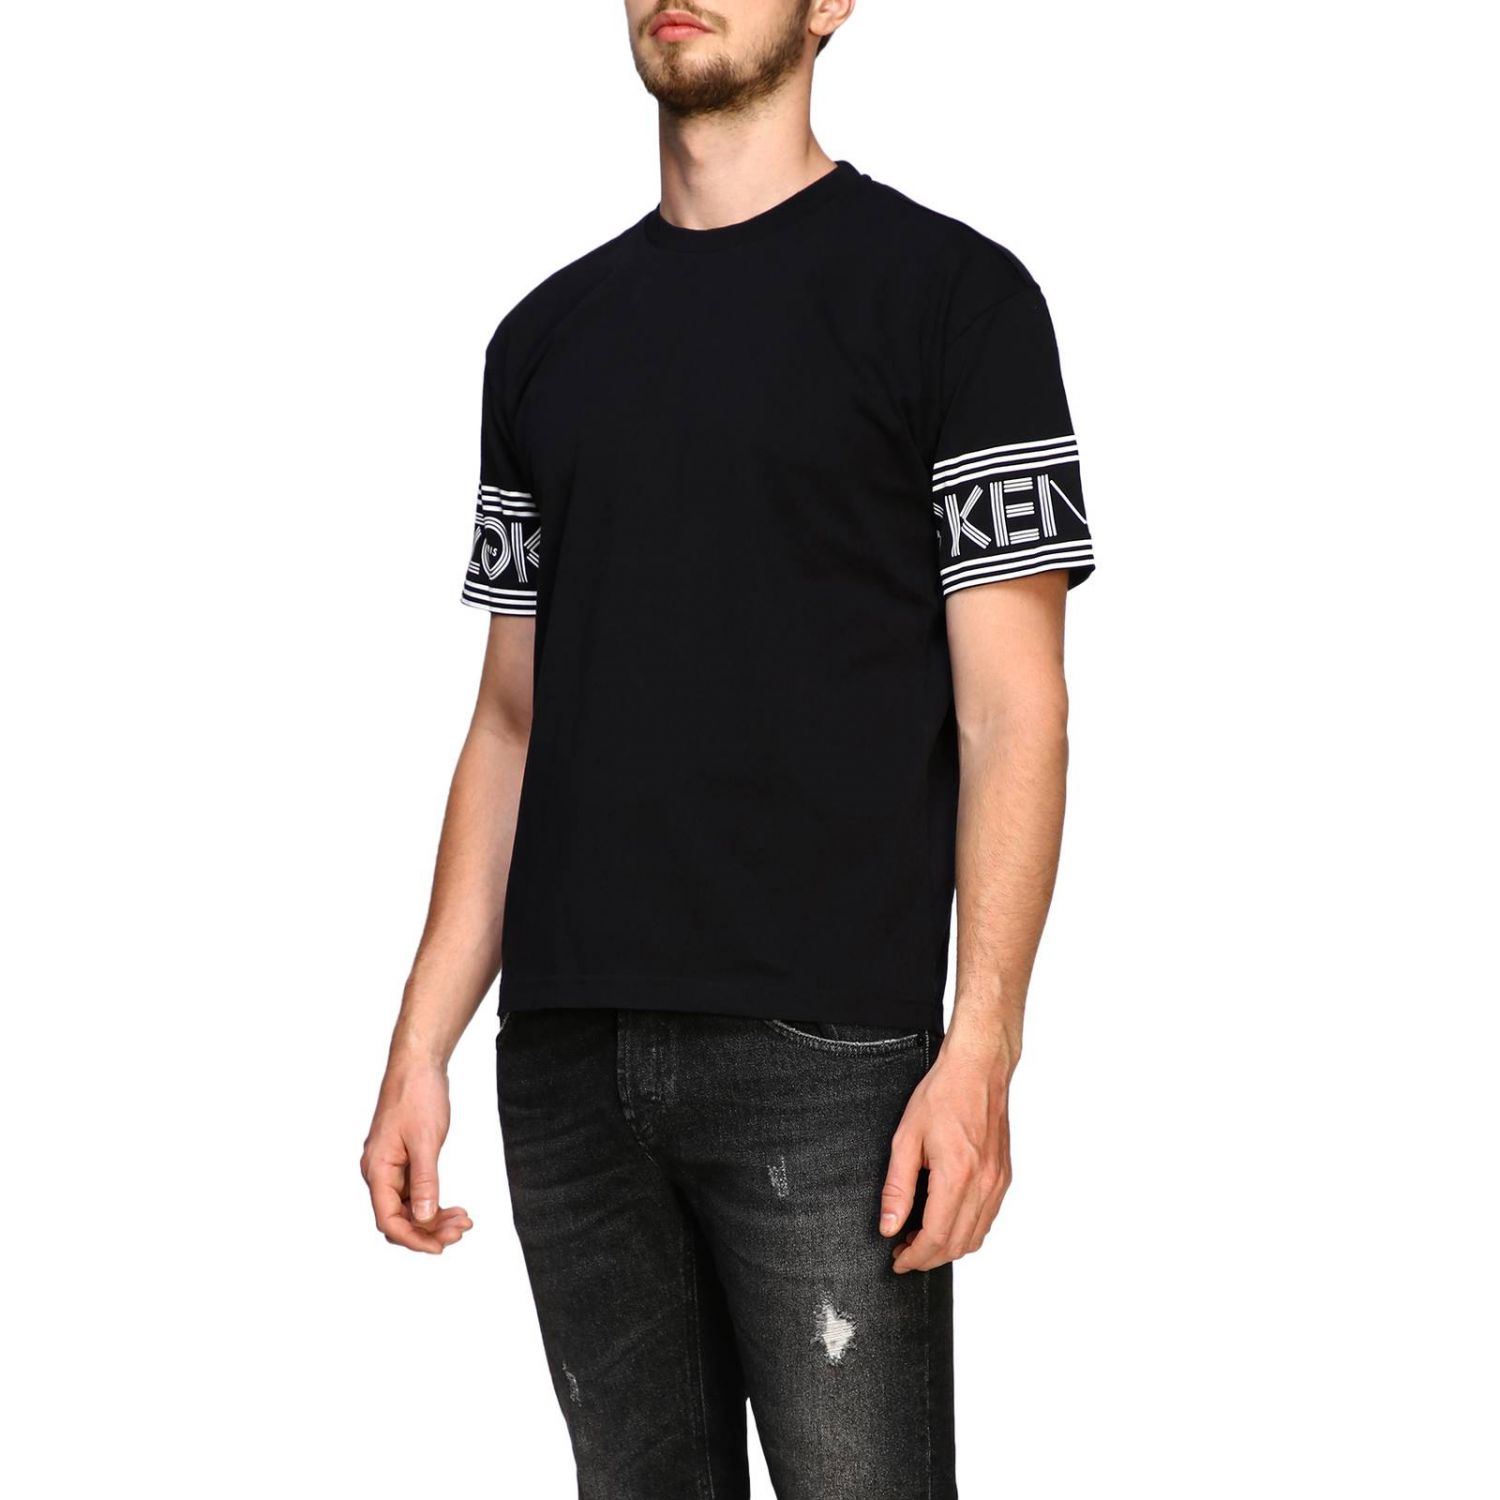 Kenzo Outlet: Short-sleeved T-shirt with Paris prints - Black | Kenzo t-shirt F005TS0434BD 